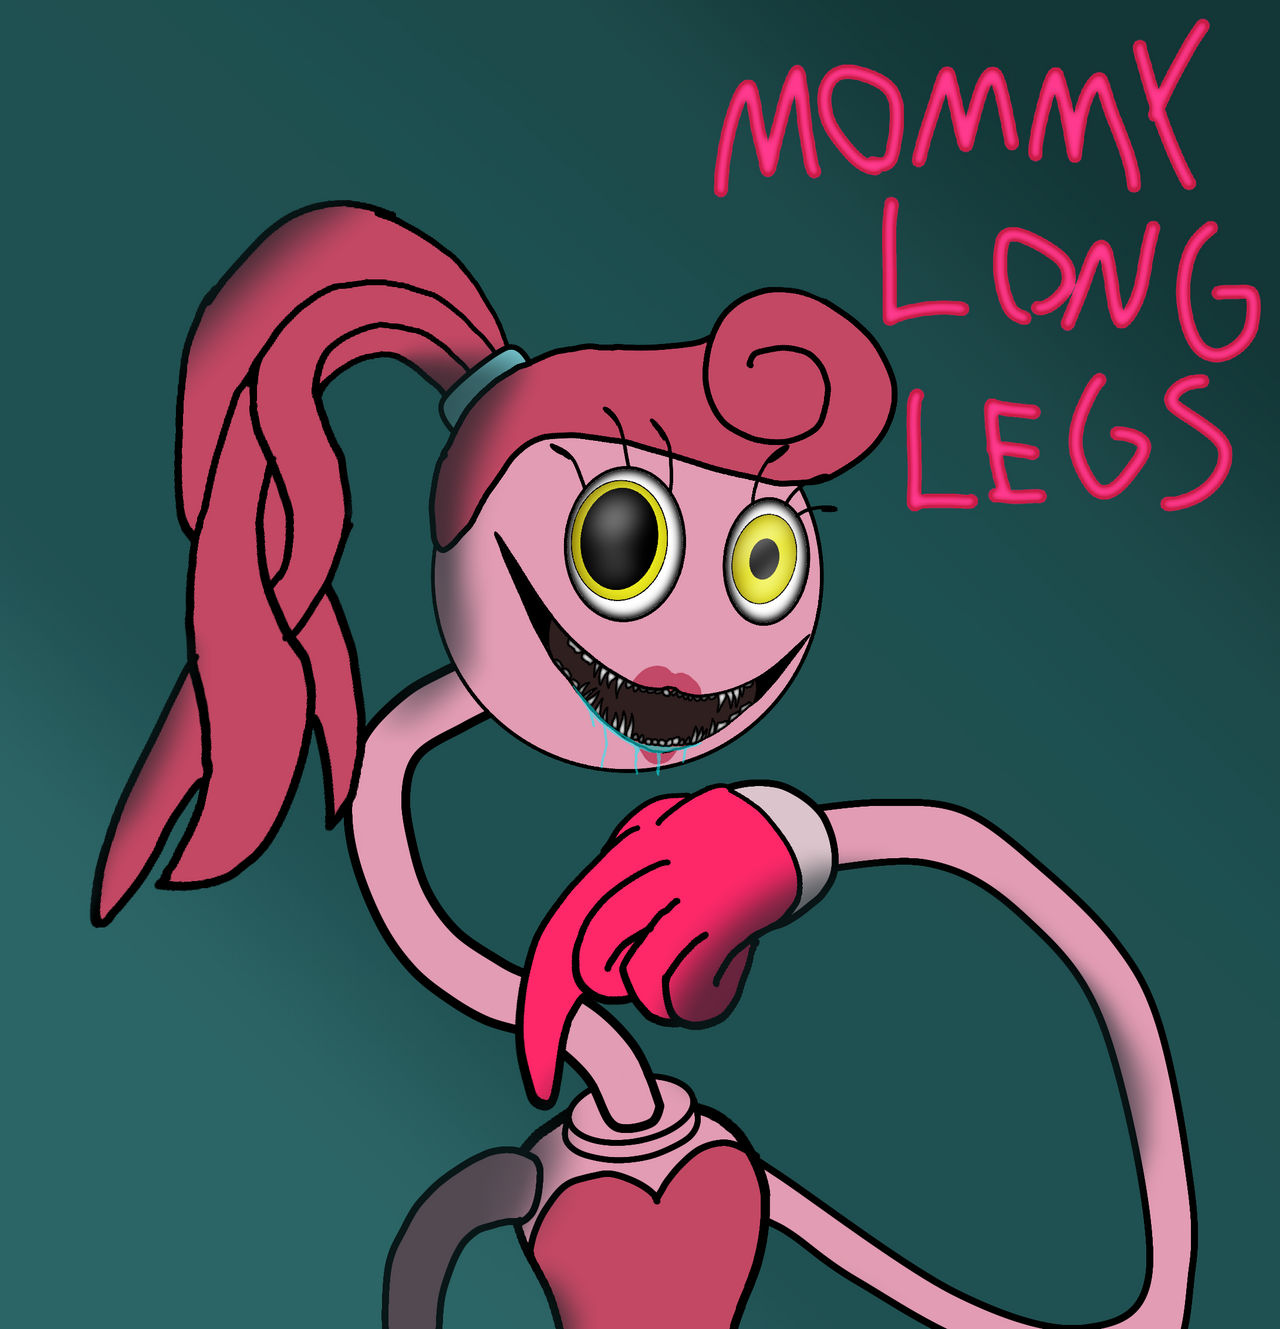 My Mommy Long Legs plush by FelixClaydude on DeviantArt